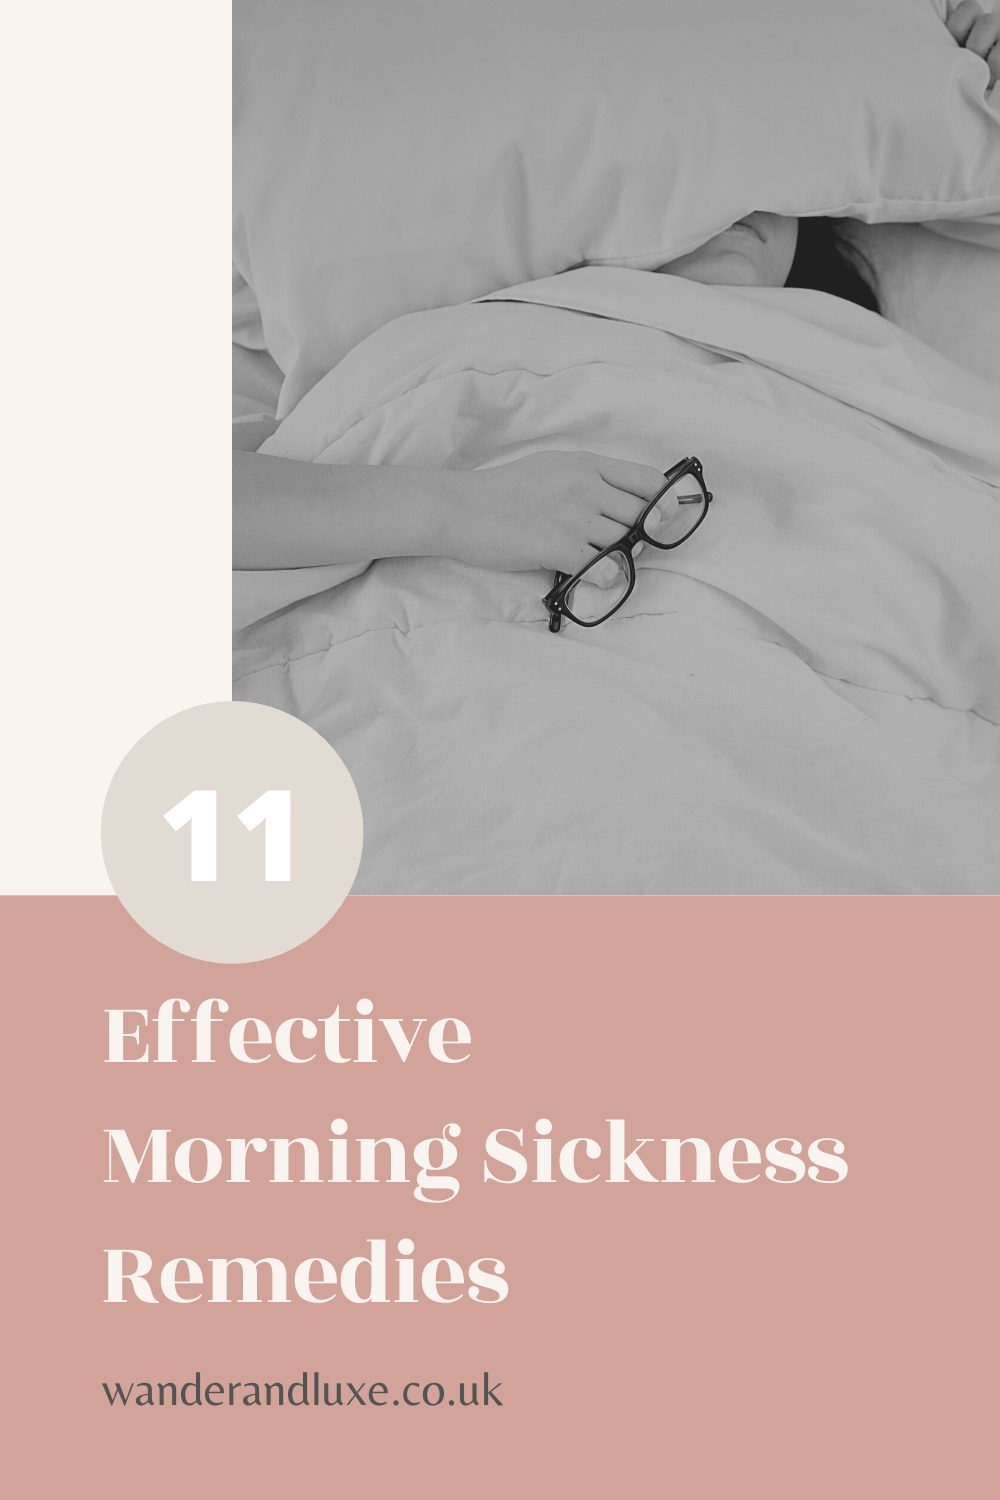 morning sickness remedies